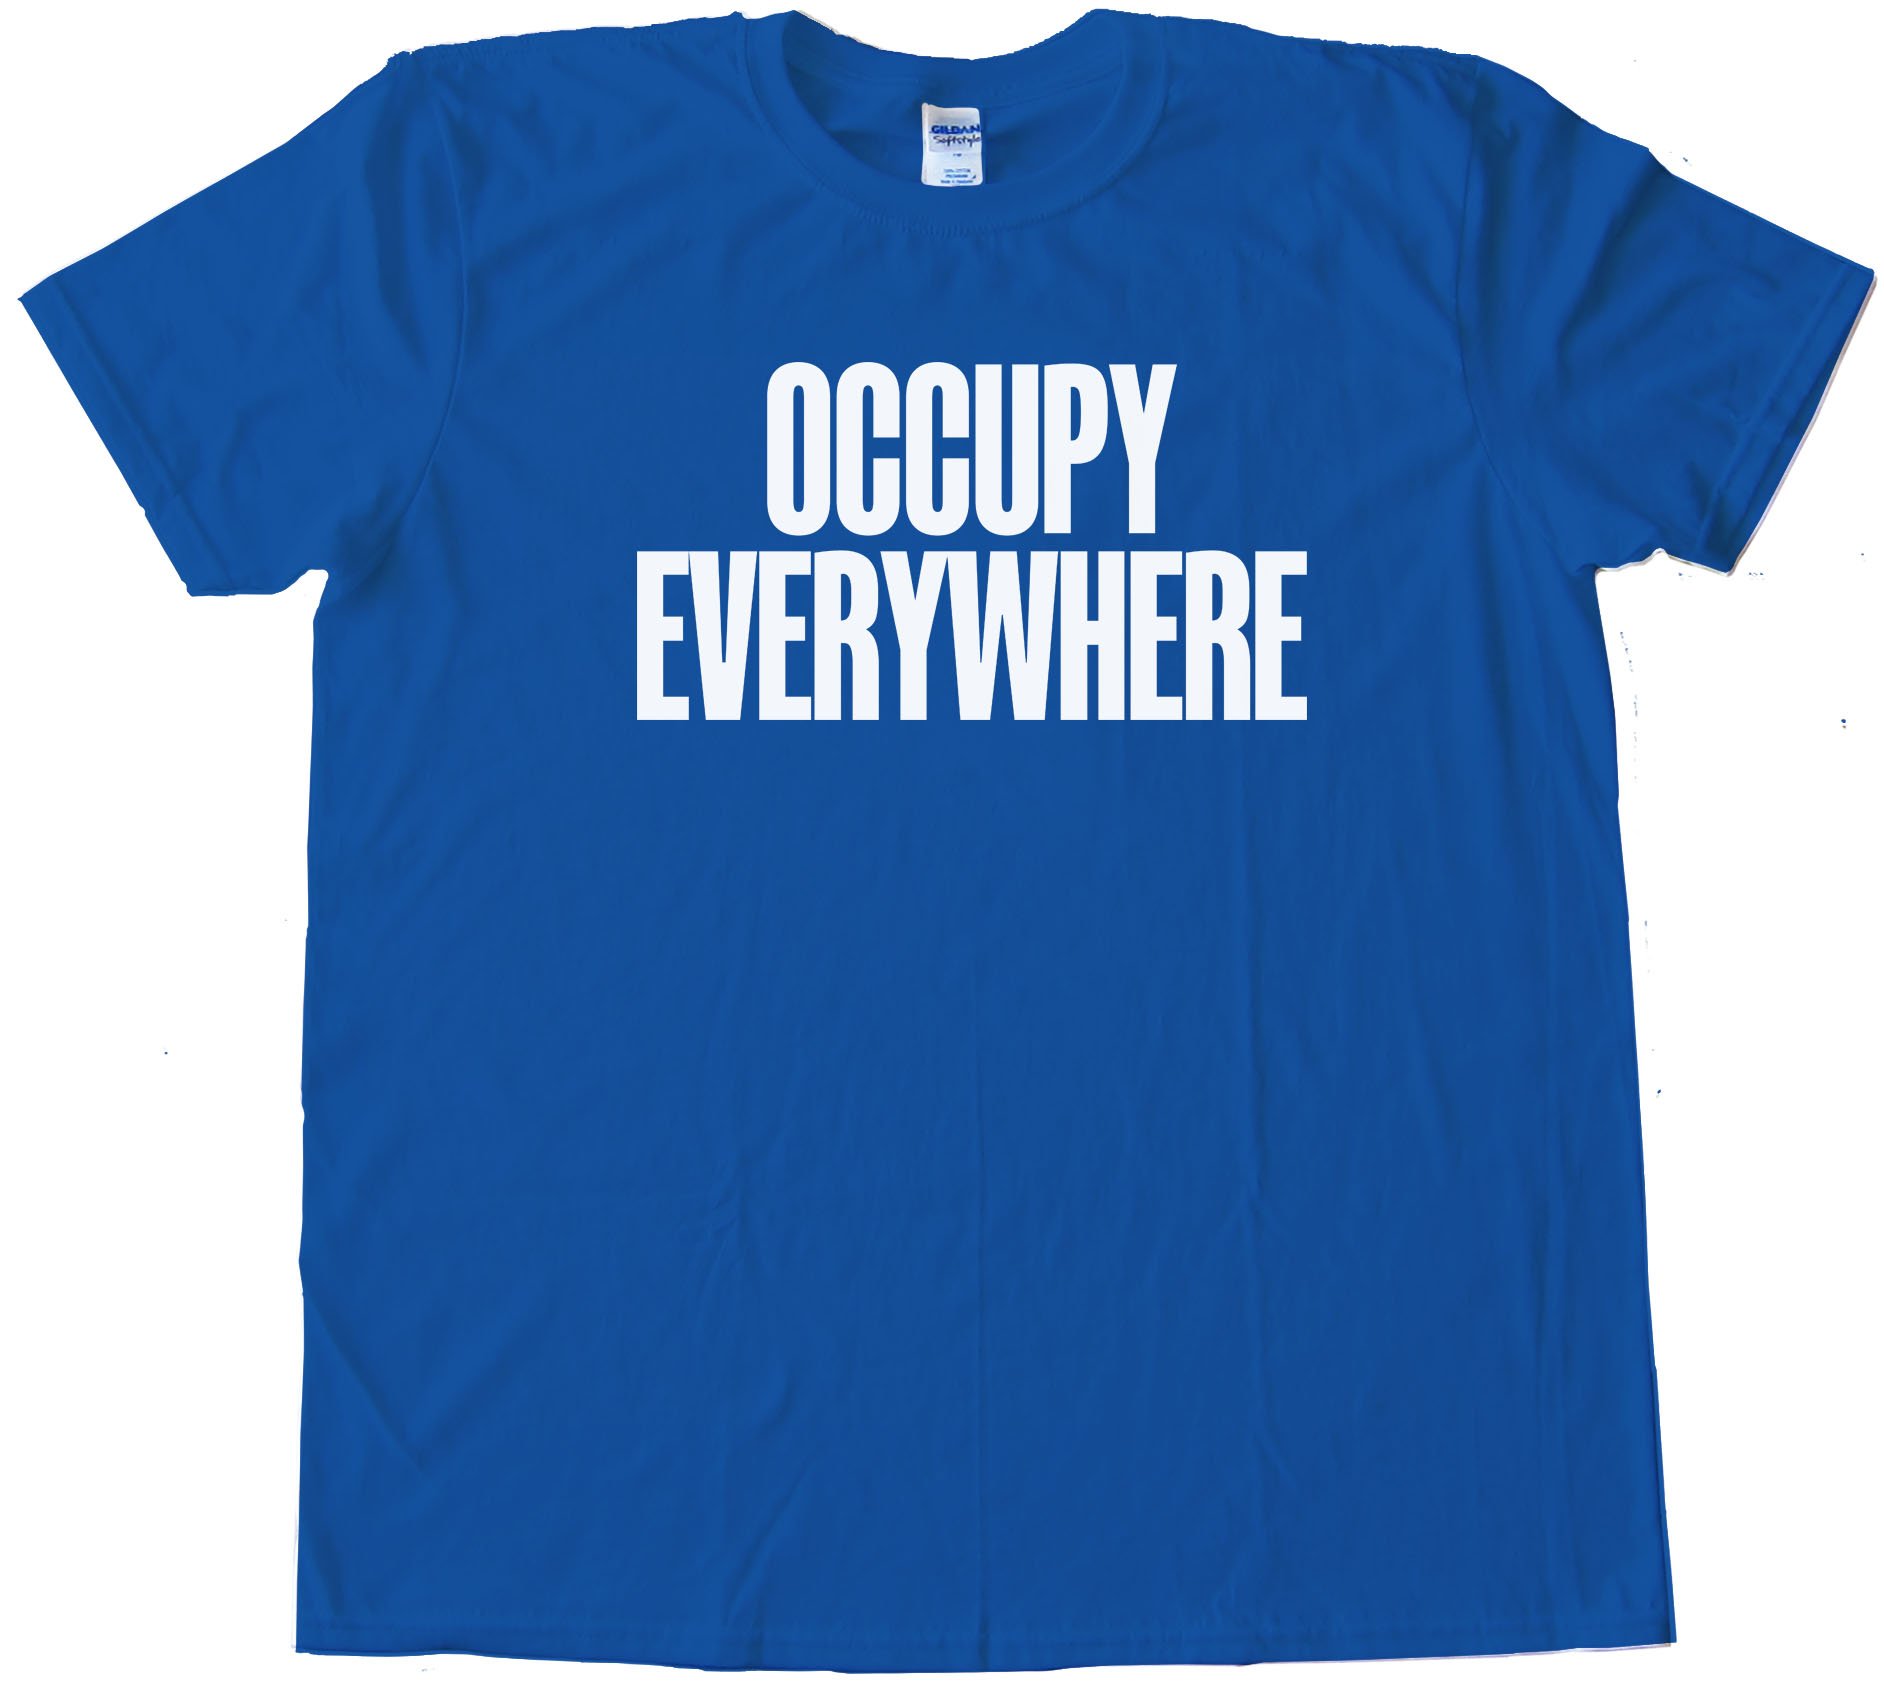 Occupy Everywhere - Tee Shirt